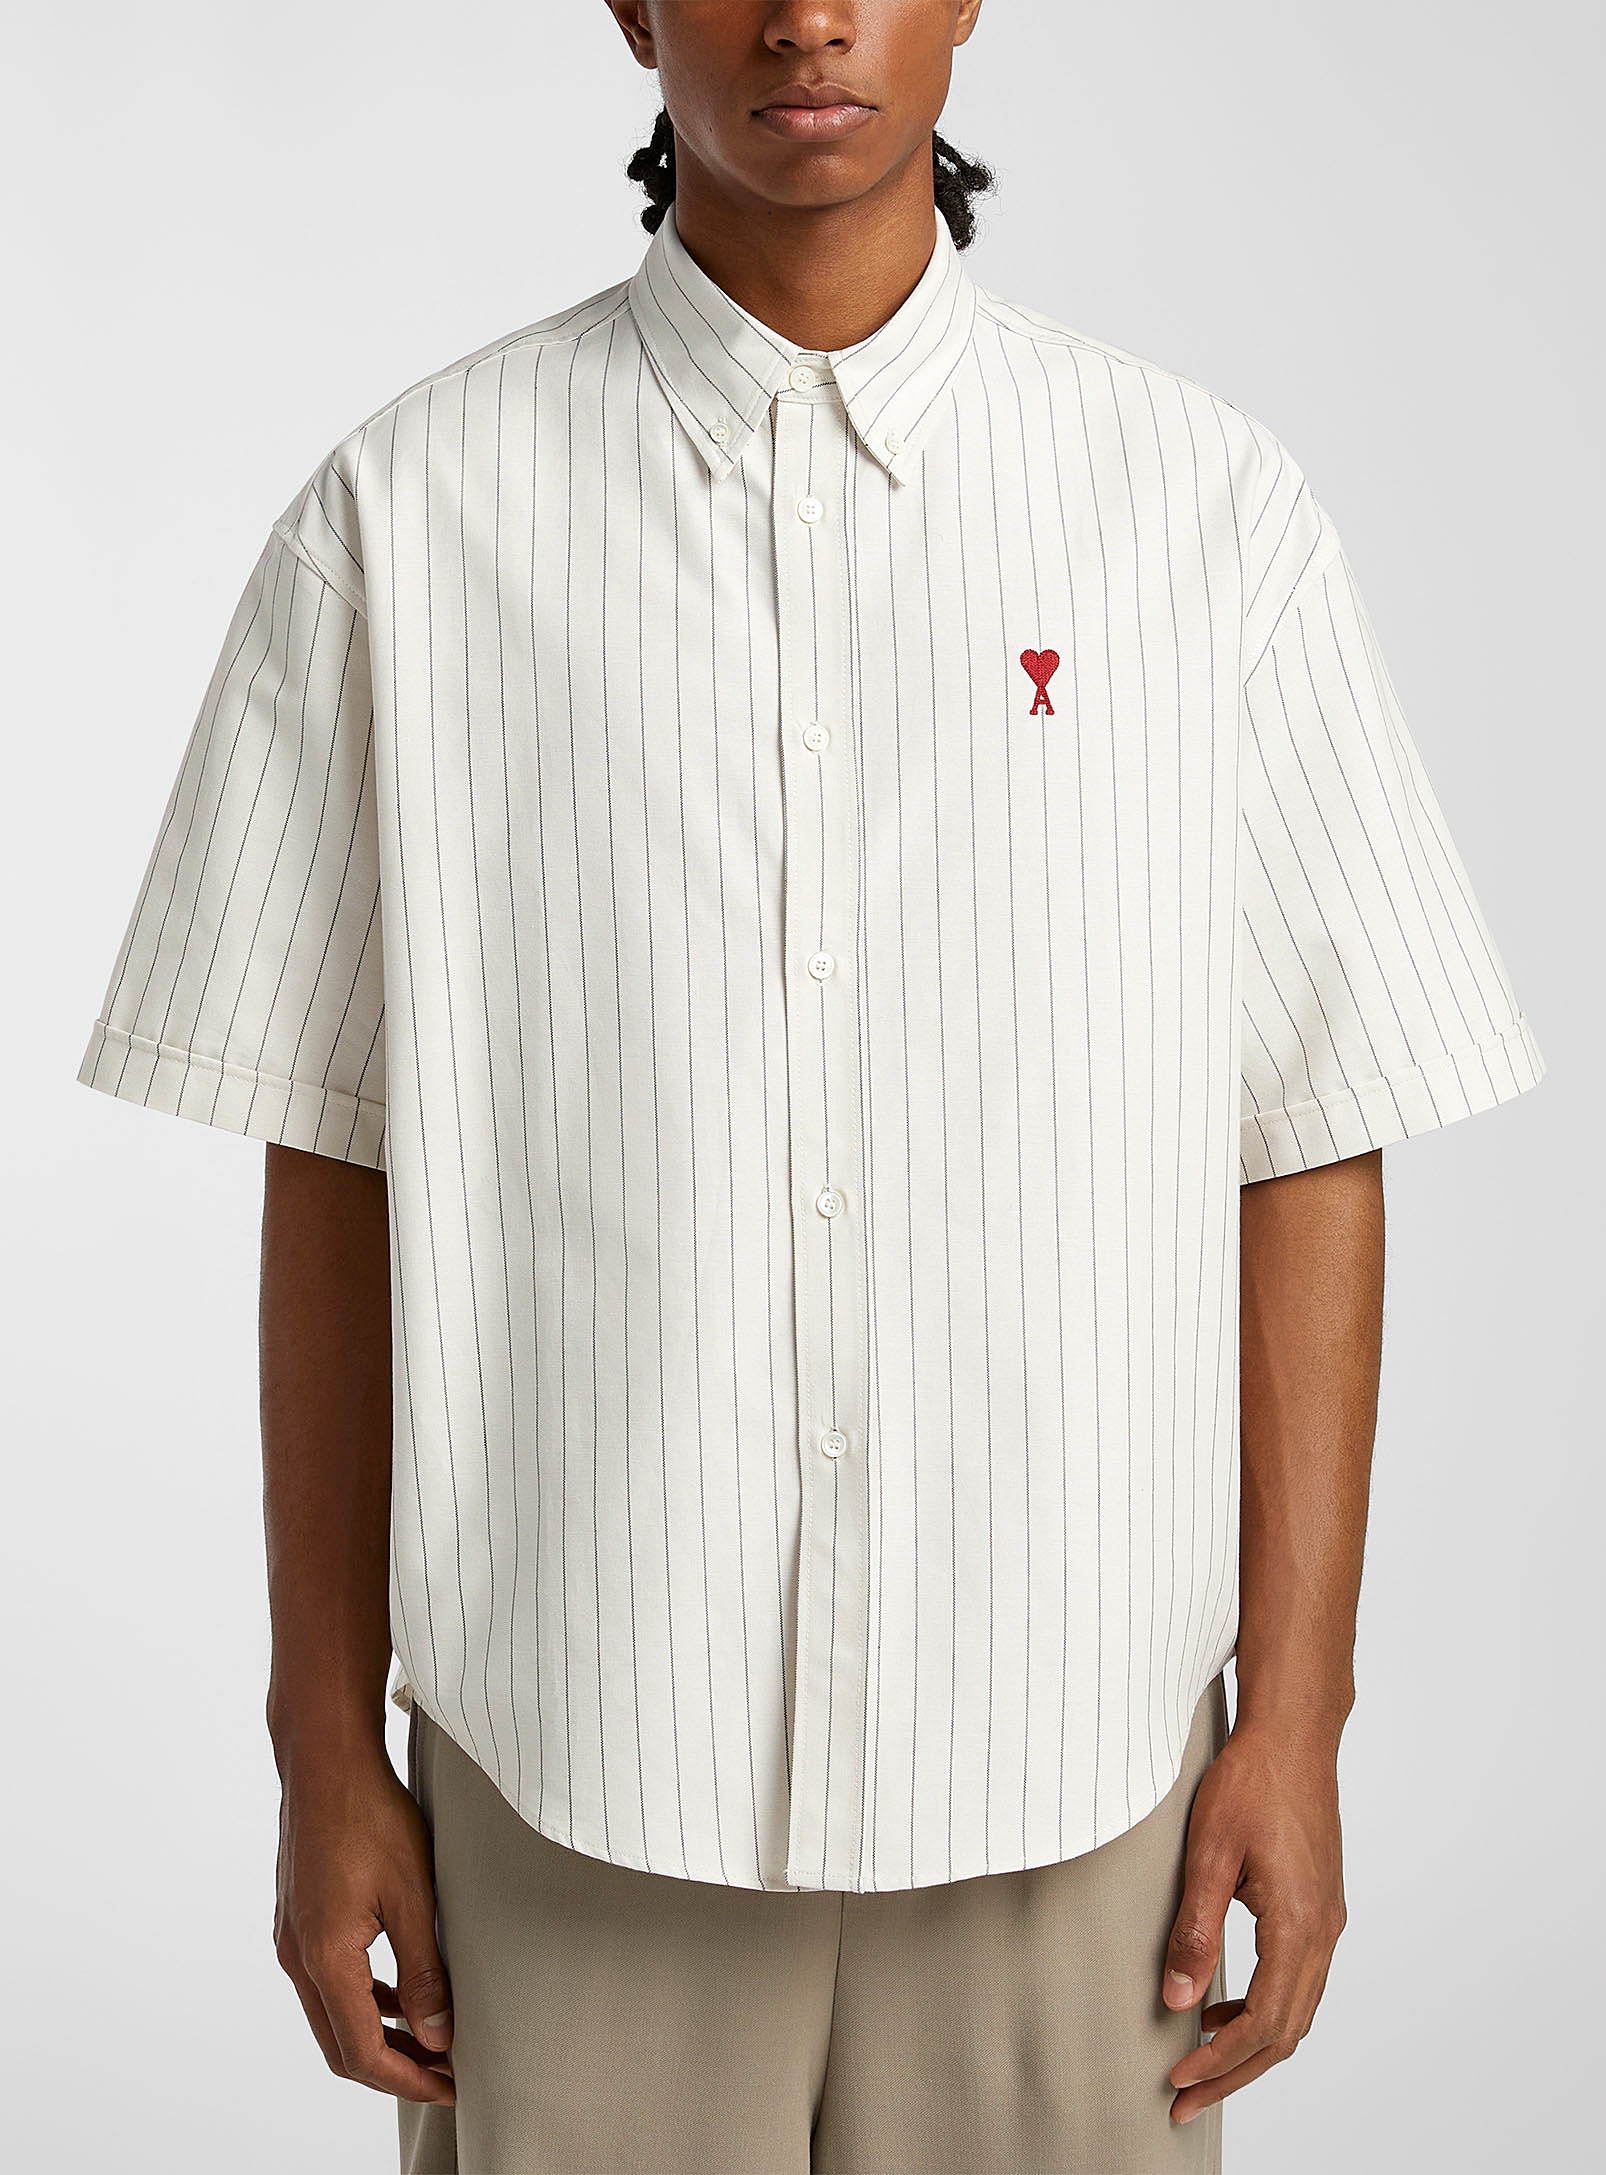 Ami Alexandre Mattiussi Embroidered Logo Striped Shirt In Ivory White